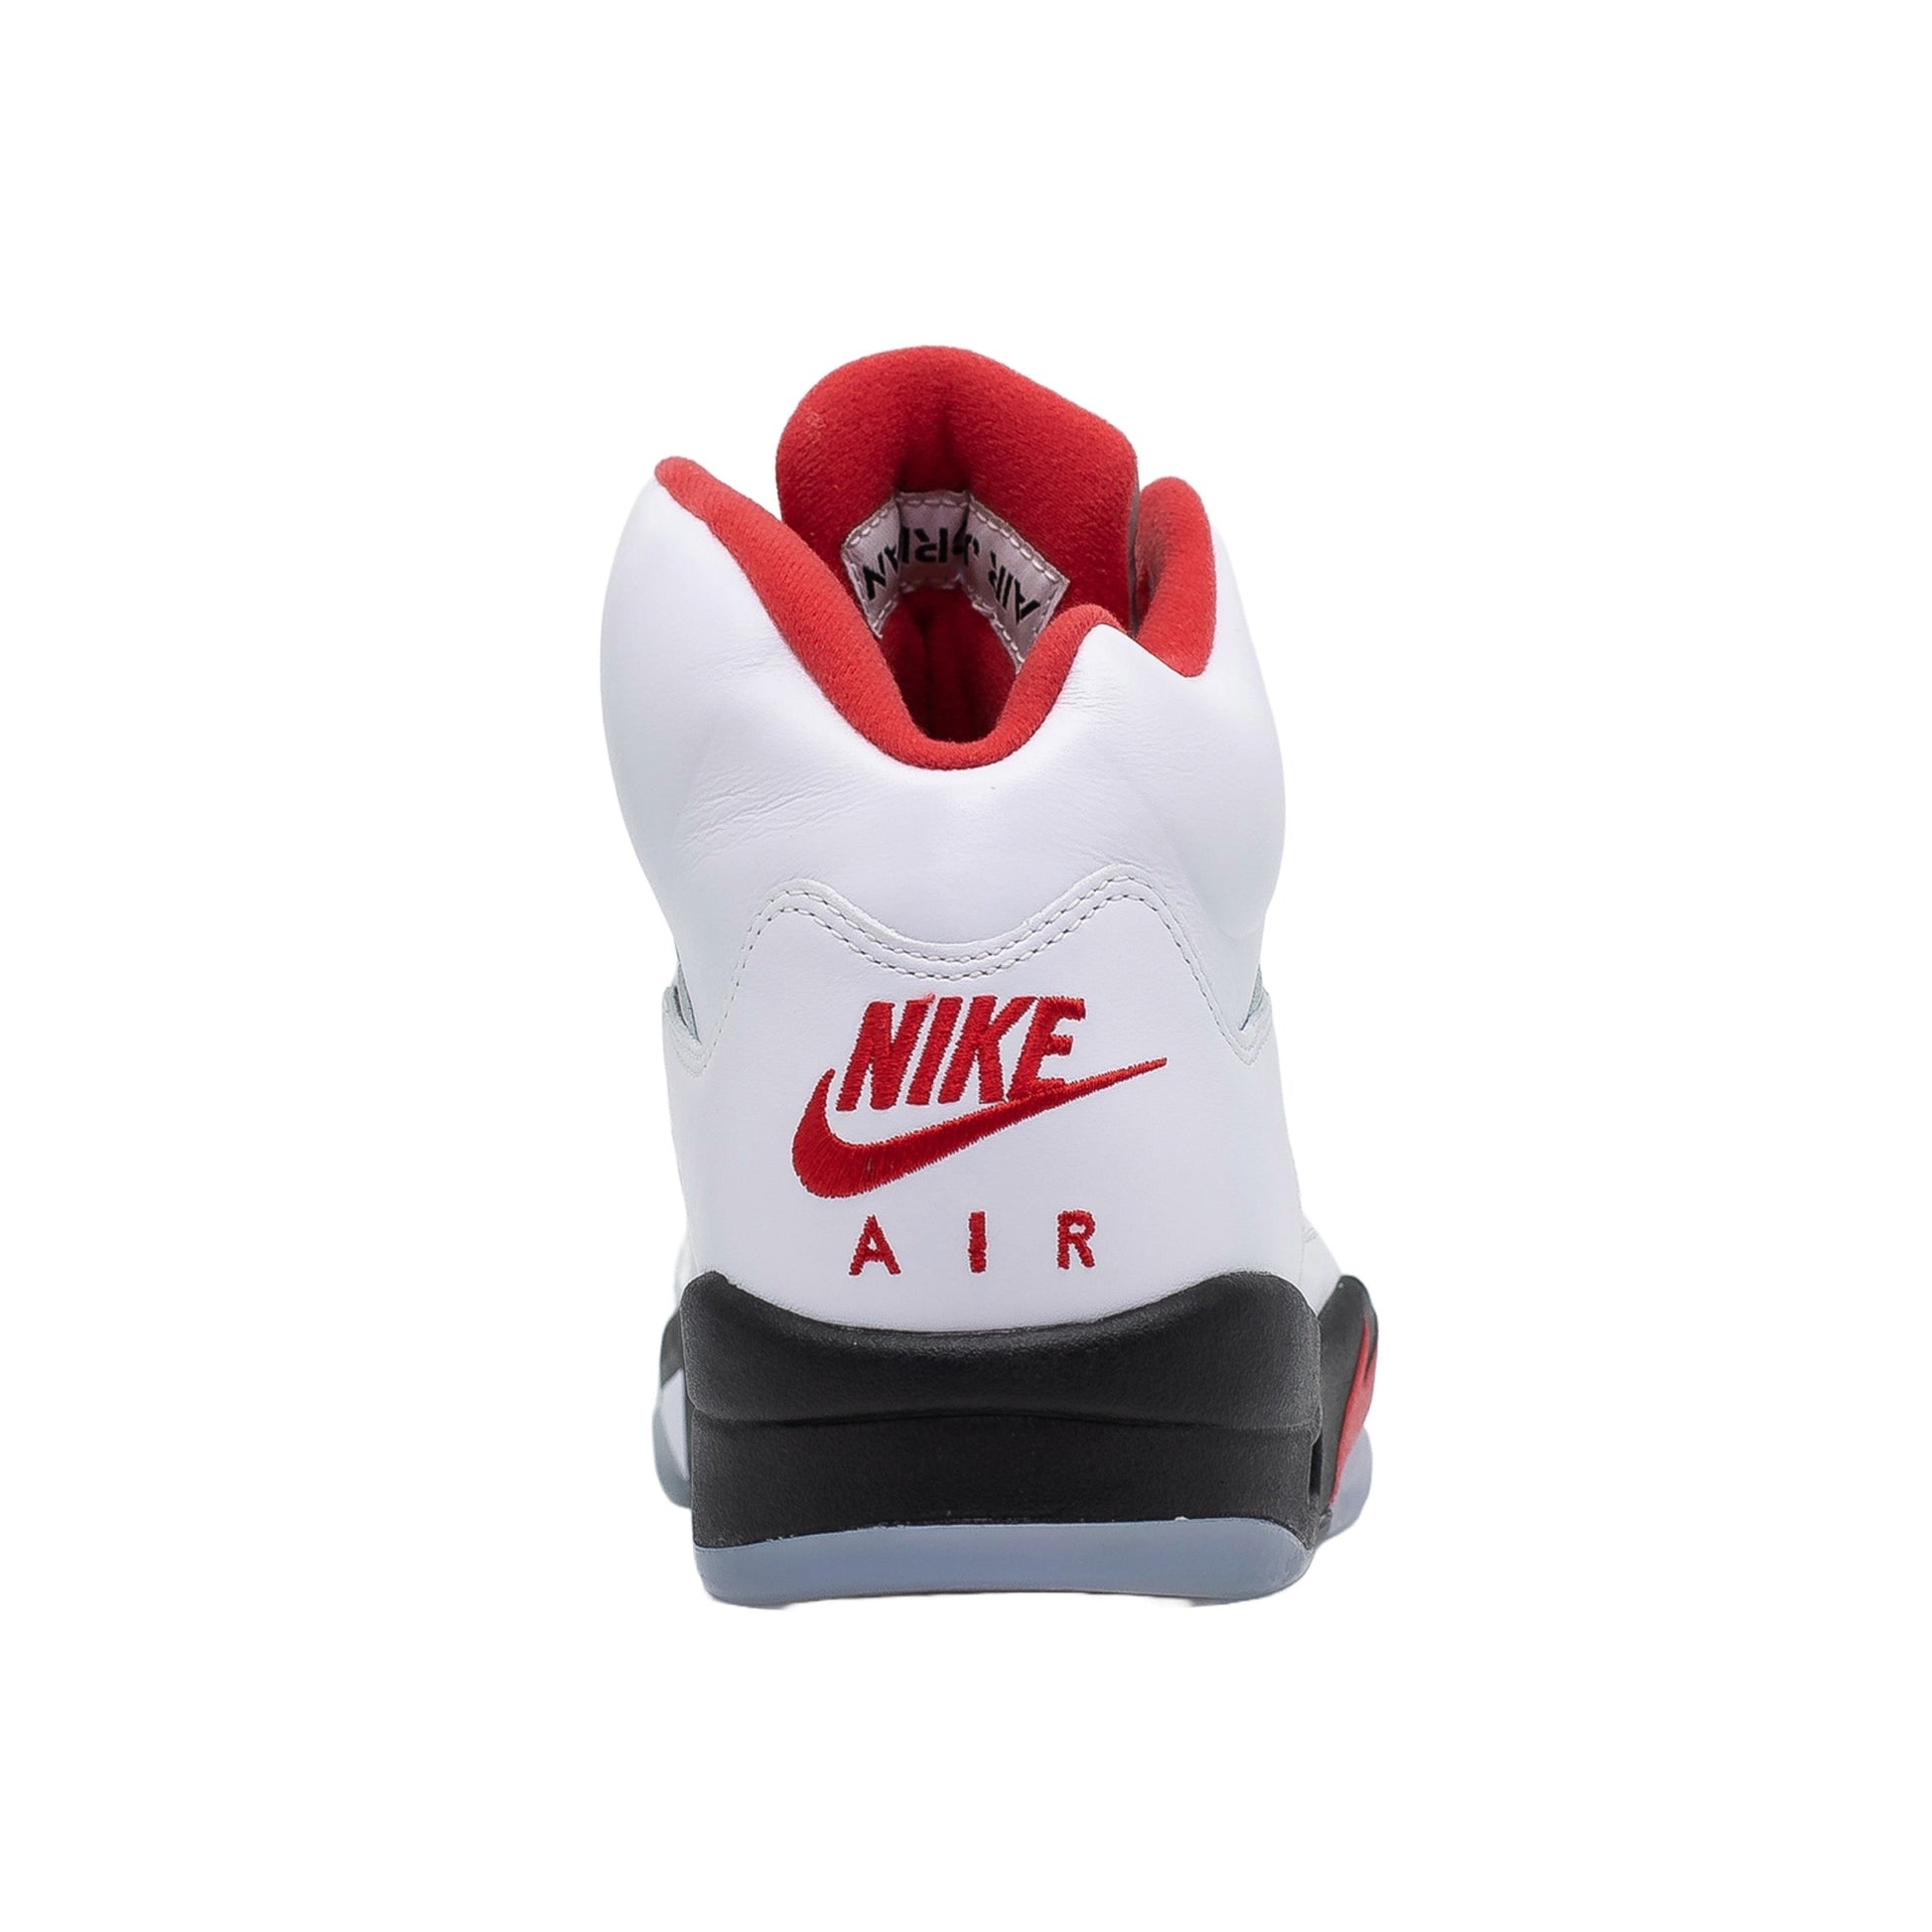 Air Jordan 5, Fire Red 2020